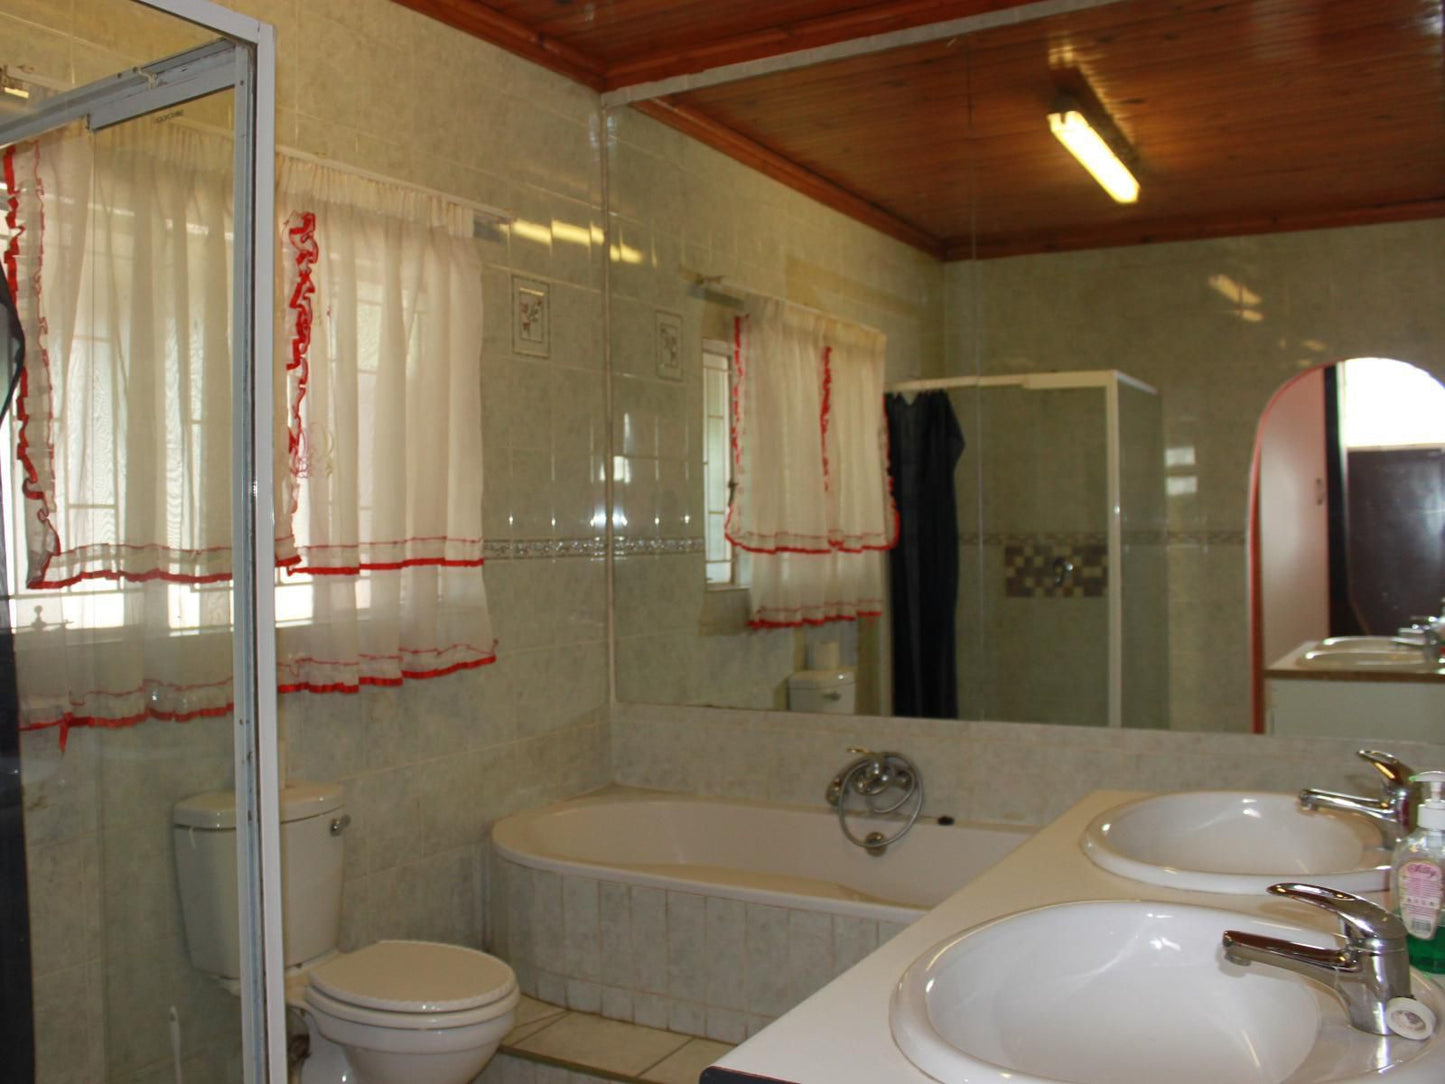 All Are Welcome Brakpan Johannesburg Gauteng South Africa Bathroom